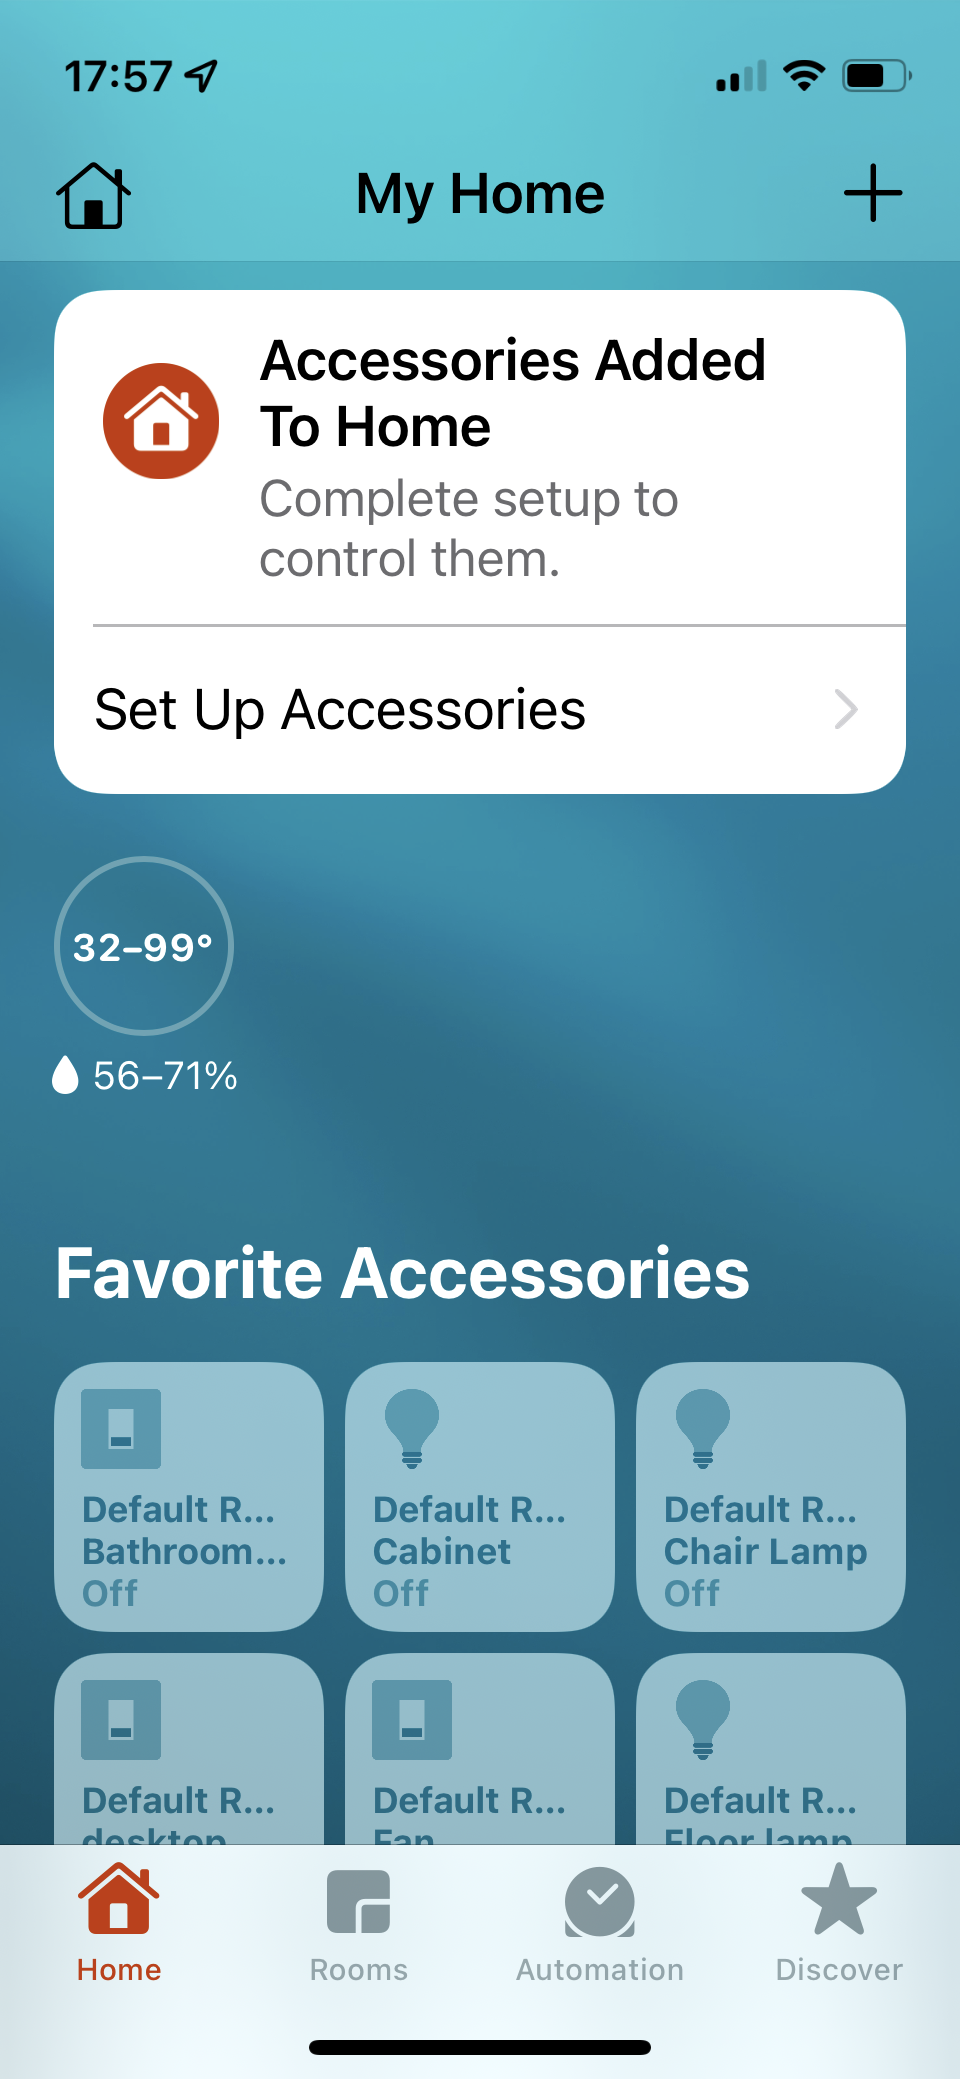 Apple's Home app redesign is just what HomeKit needs